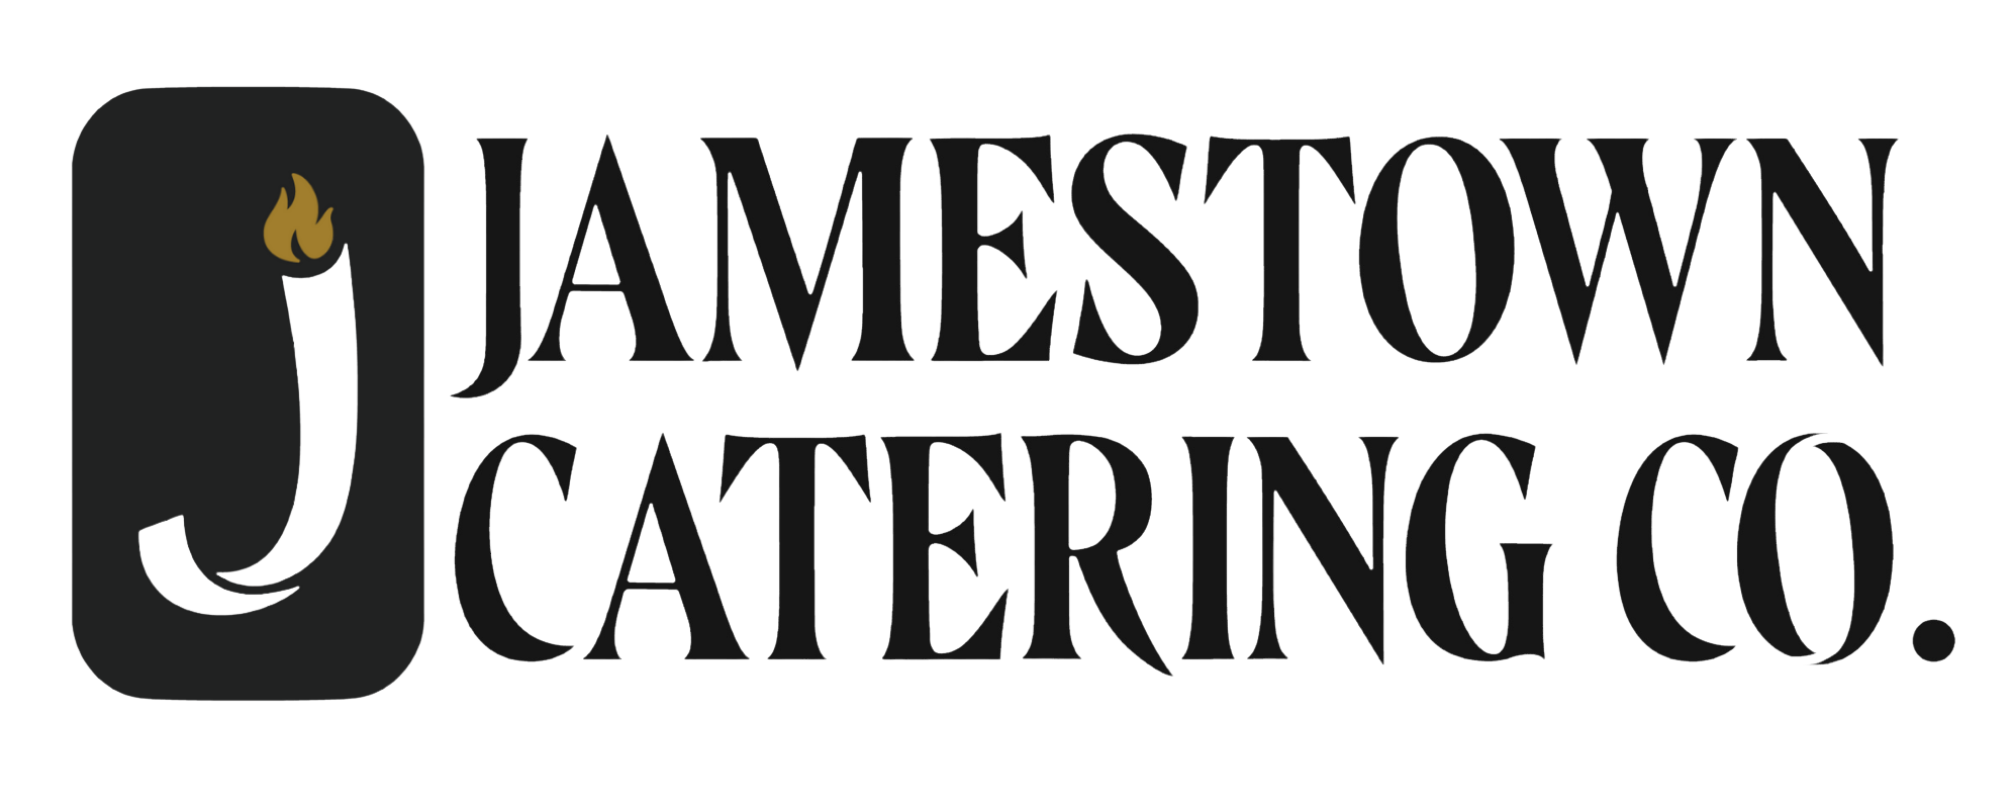 Jamestown Catering Co. logo